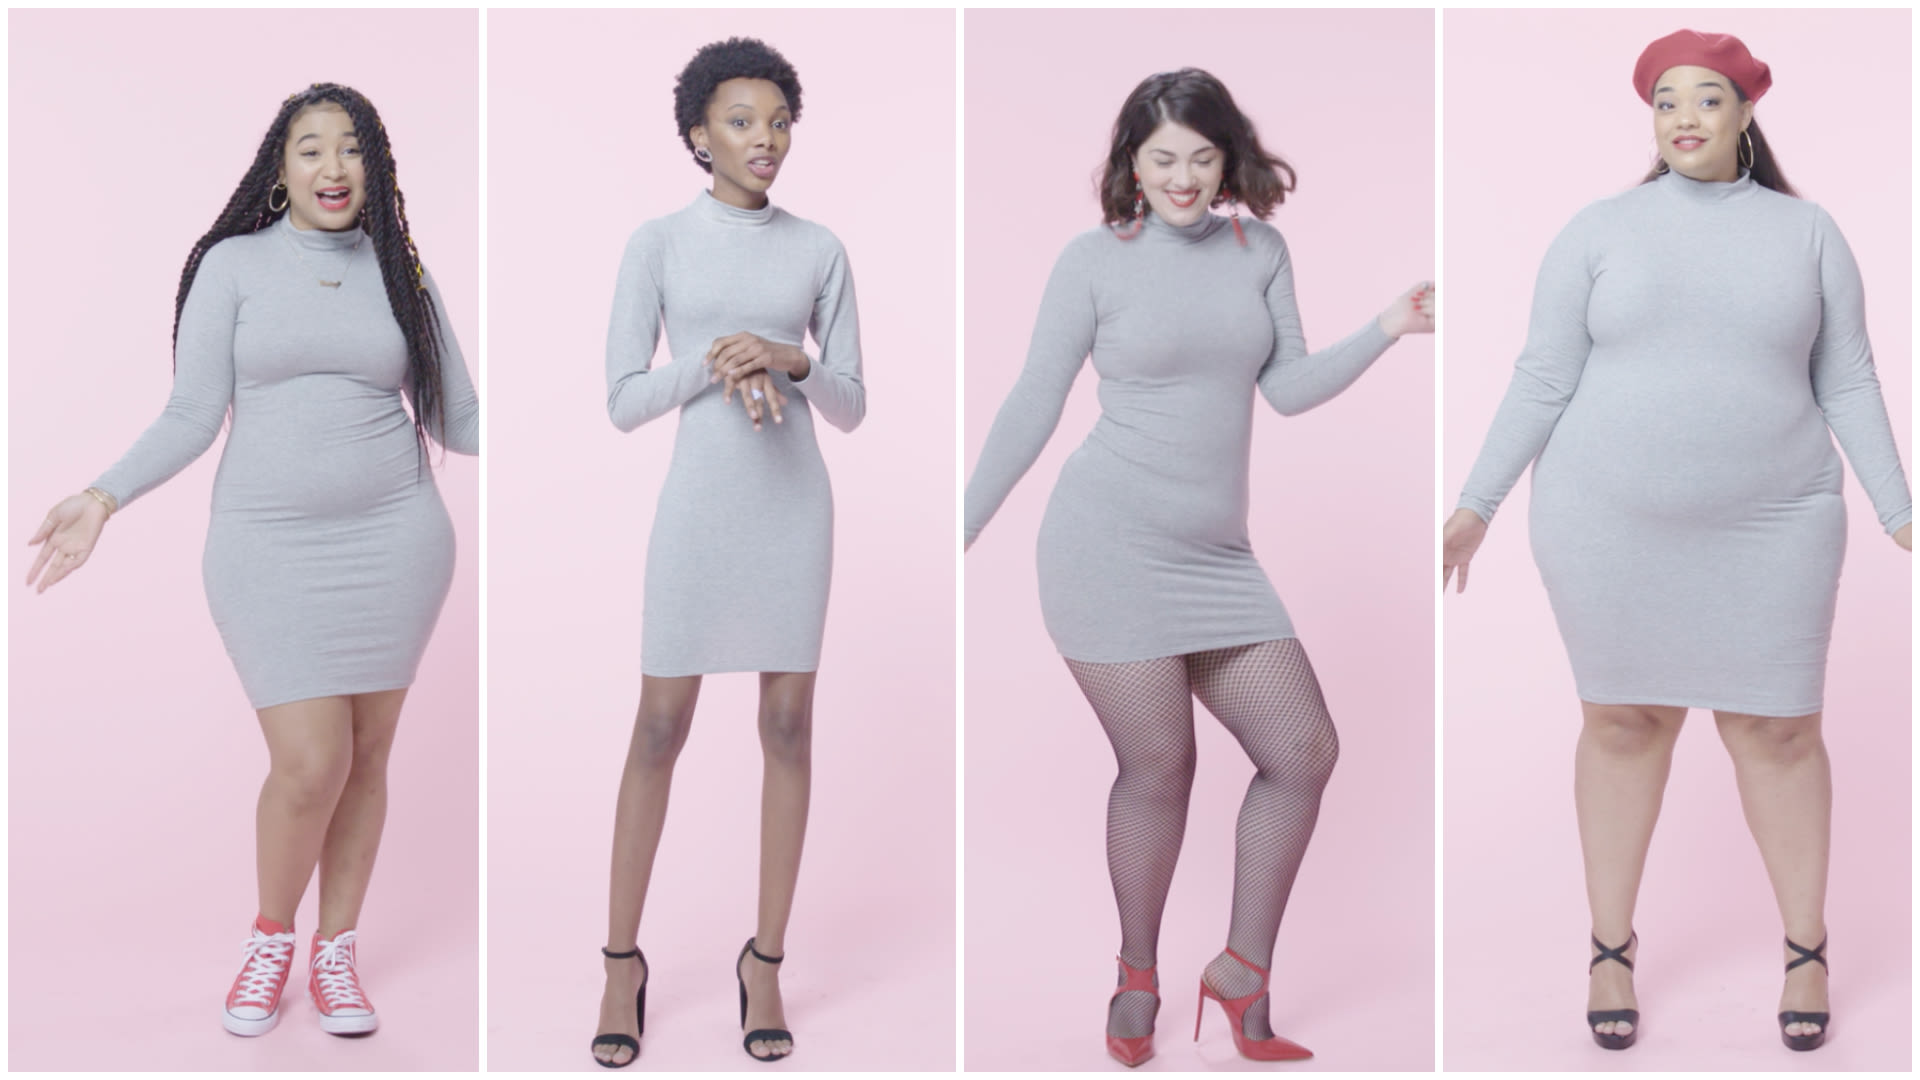 Watch Women Sizes 0 Through 28 Try on the Same Bodycon Dress